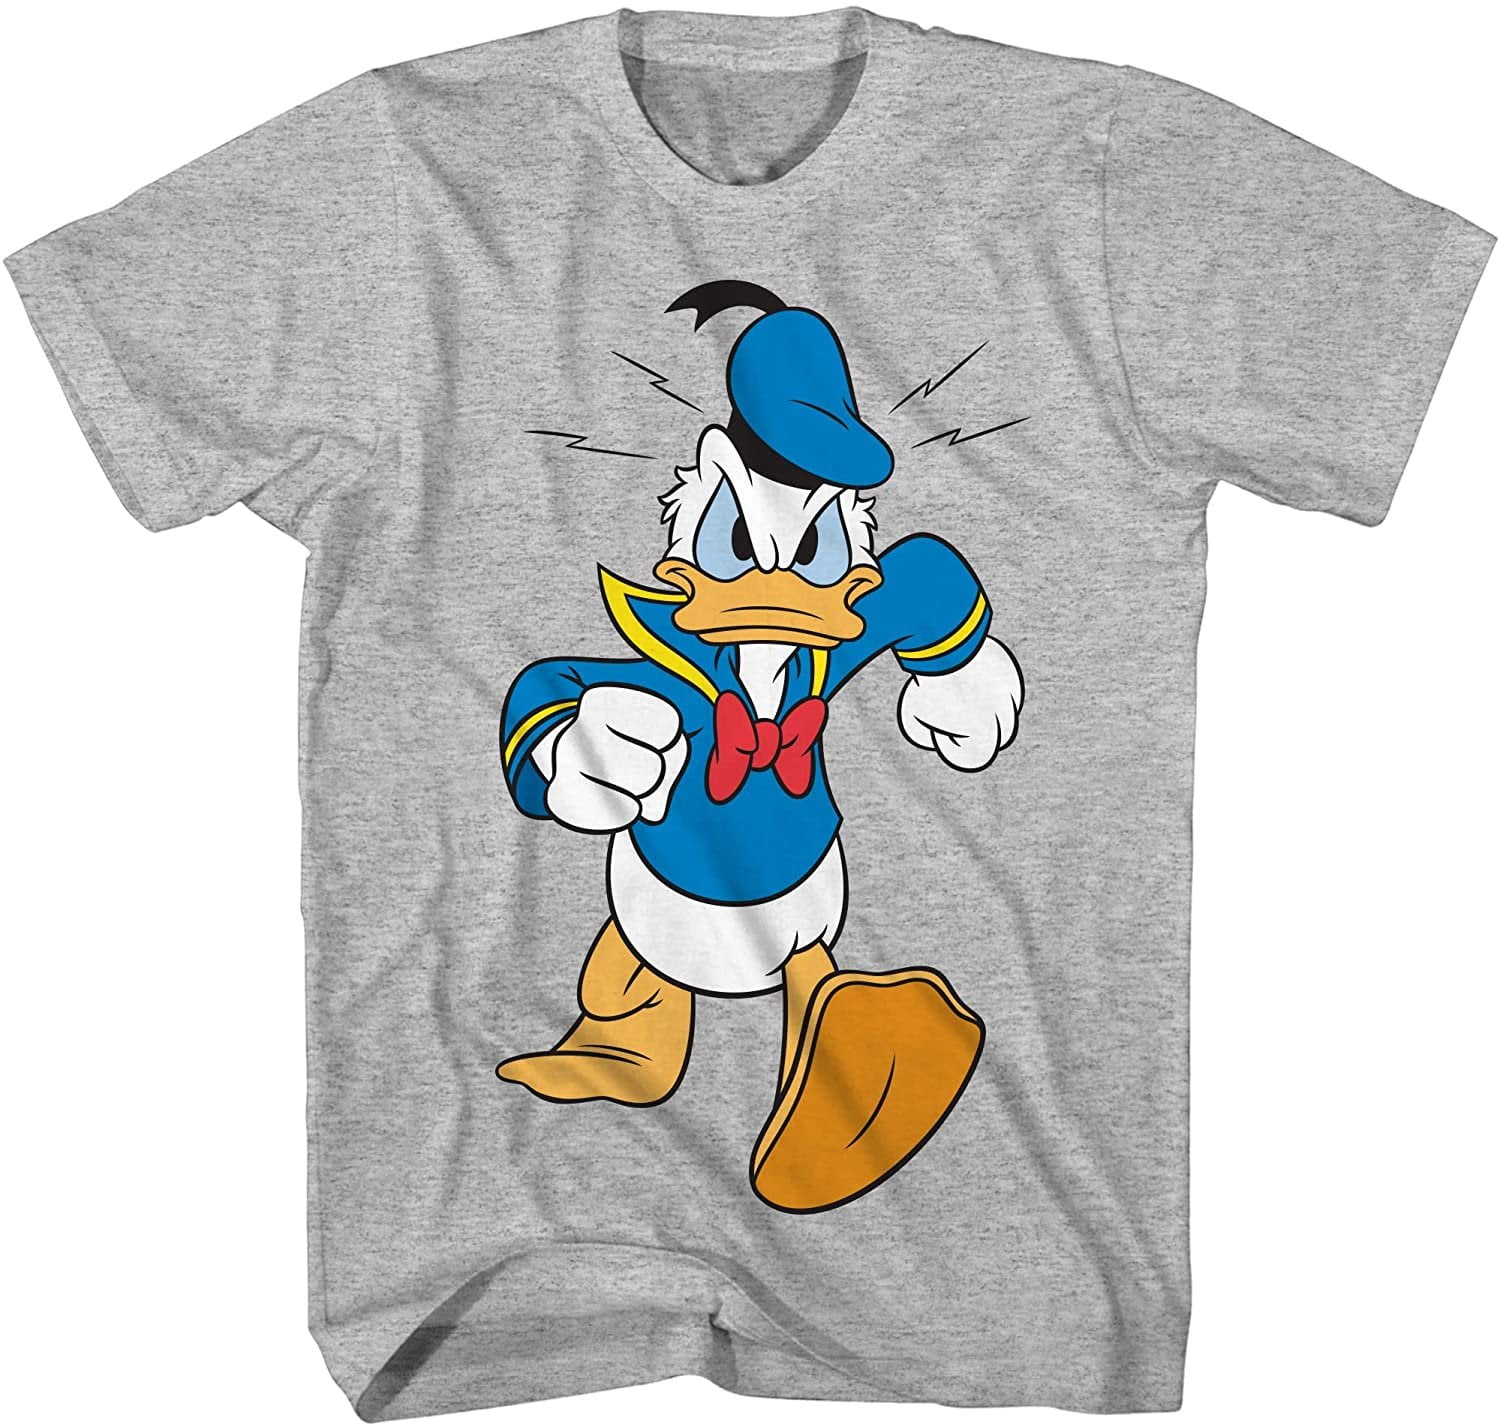 Graphic L Heather T-shirt Shirt, Mens – Classic Disney Donald Donald Duck Duck